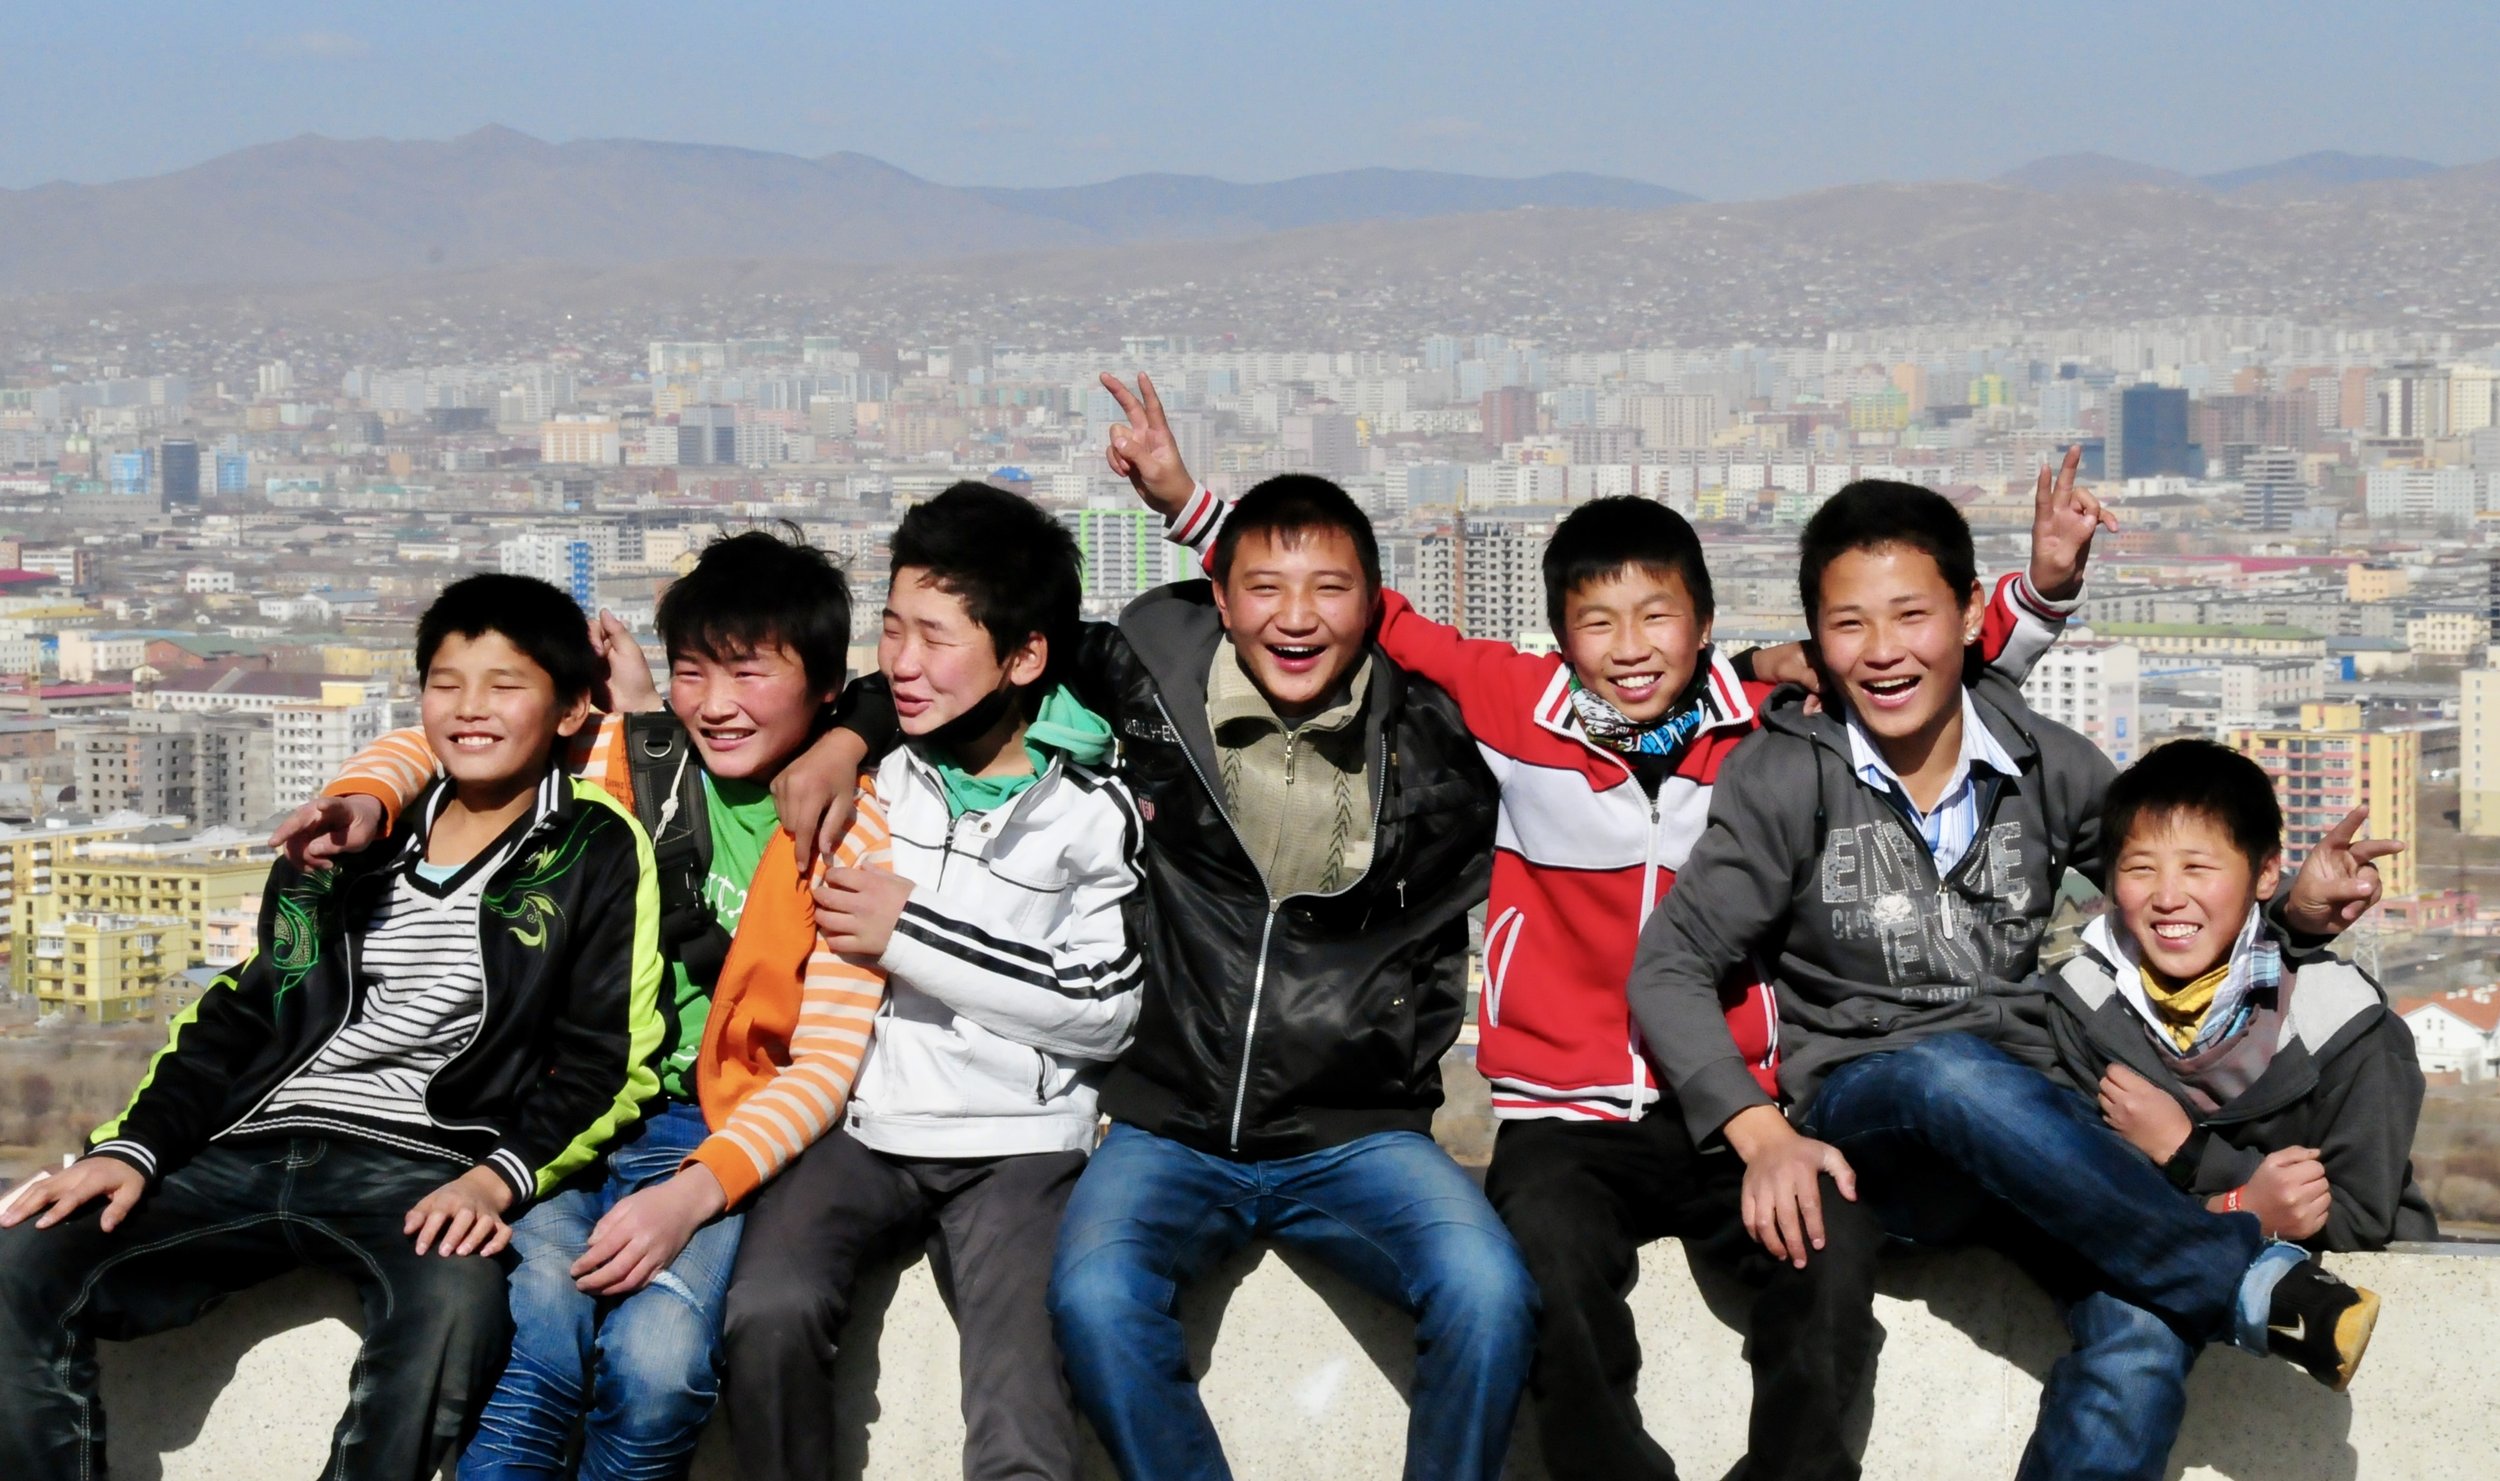 2009 10 07 013 Mongolia Ulanbaatar hill monument russian mongolian friendship boys 2.jpg